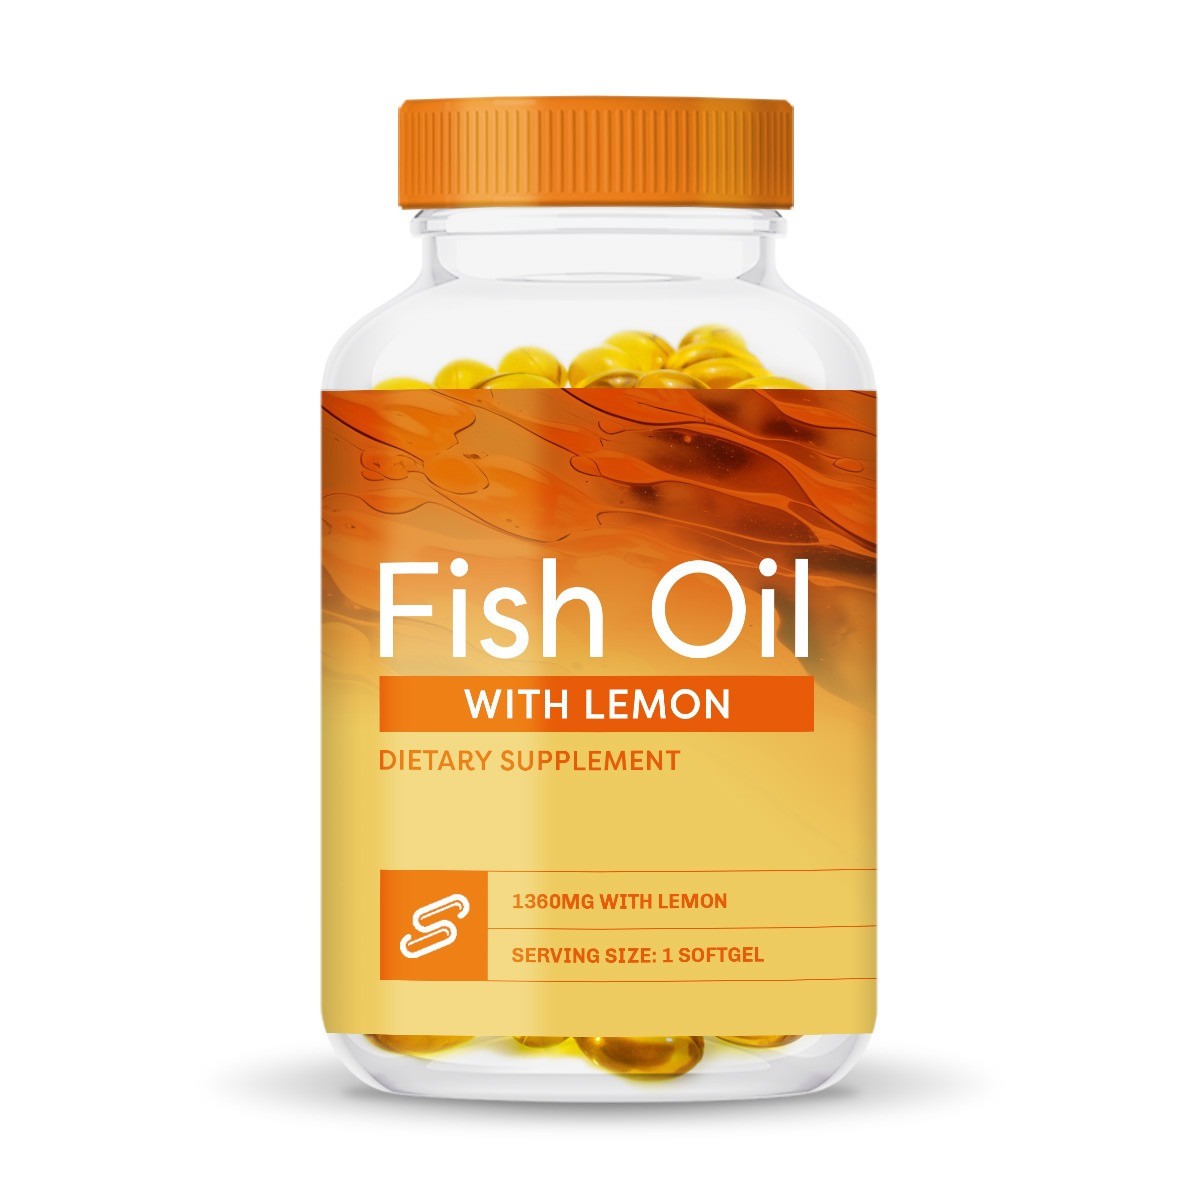 Fish Oil with Lemon